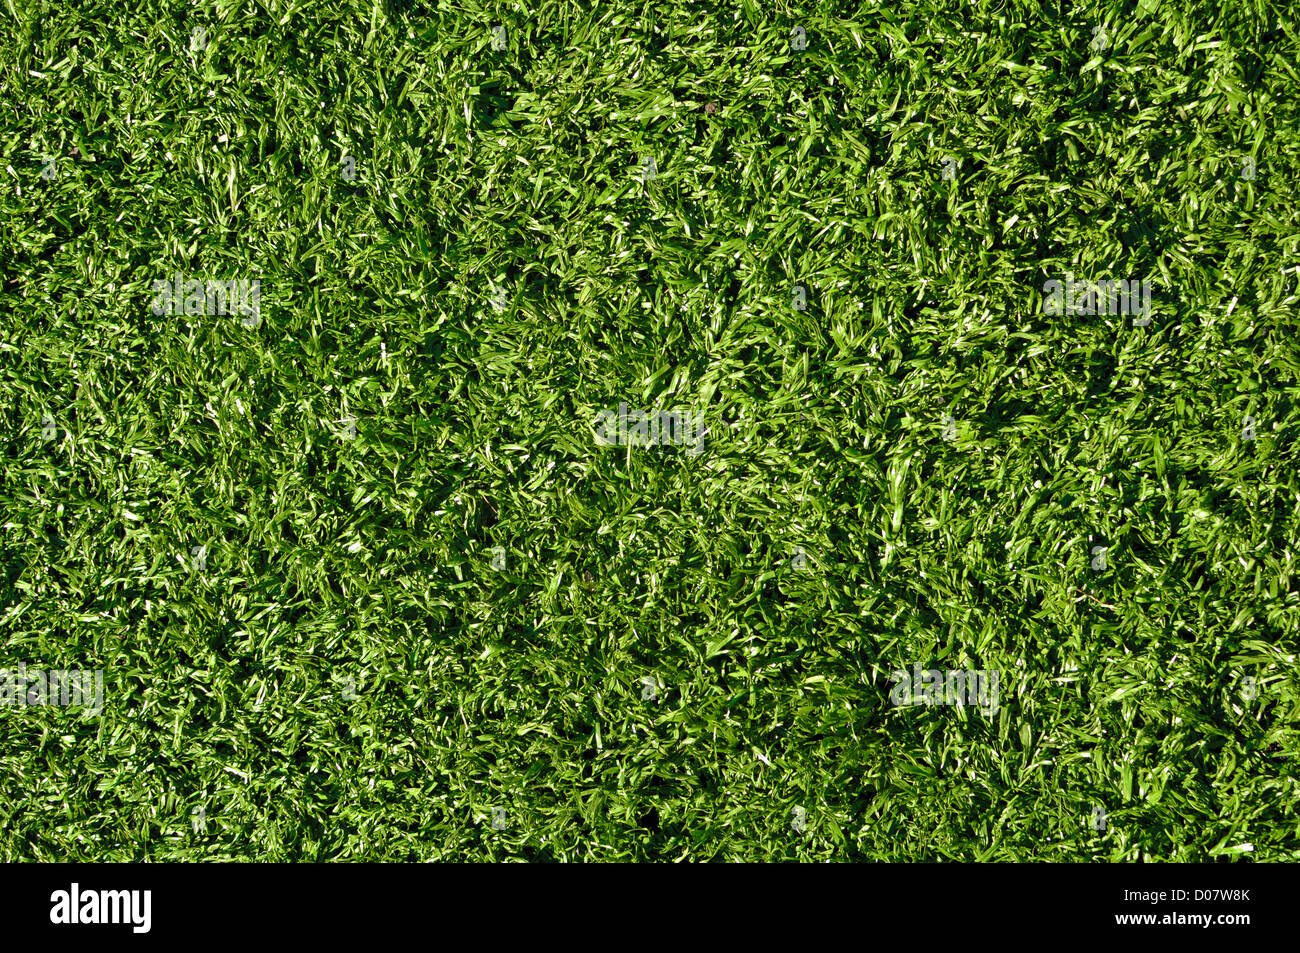 Fake Grass used for Soccer, Football, Baseball or Golf Stock Photo